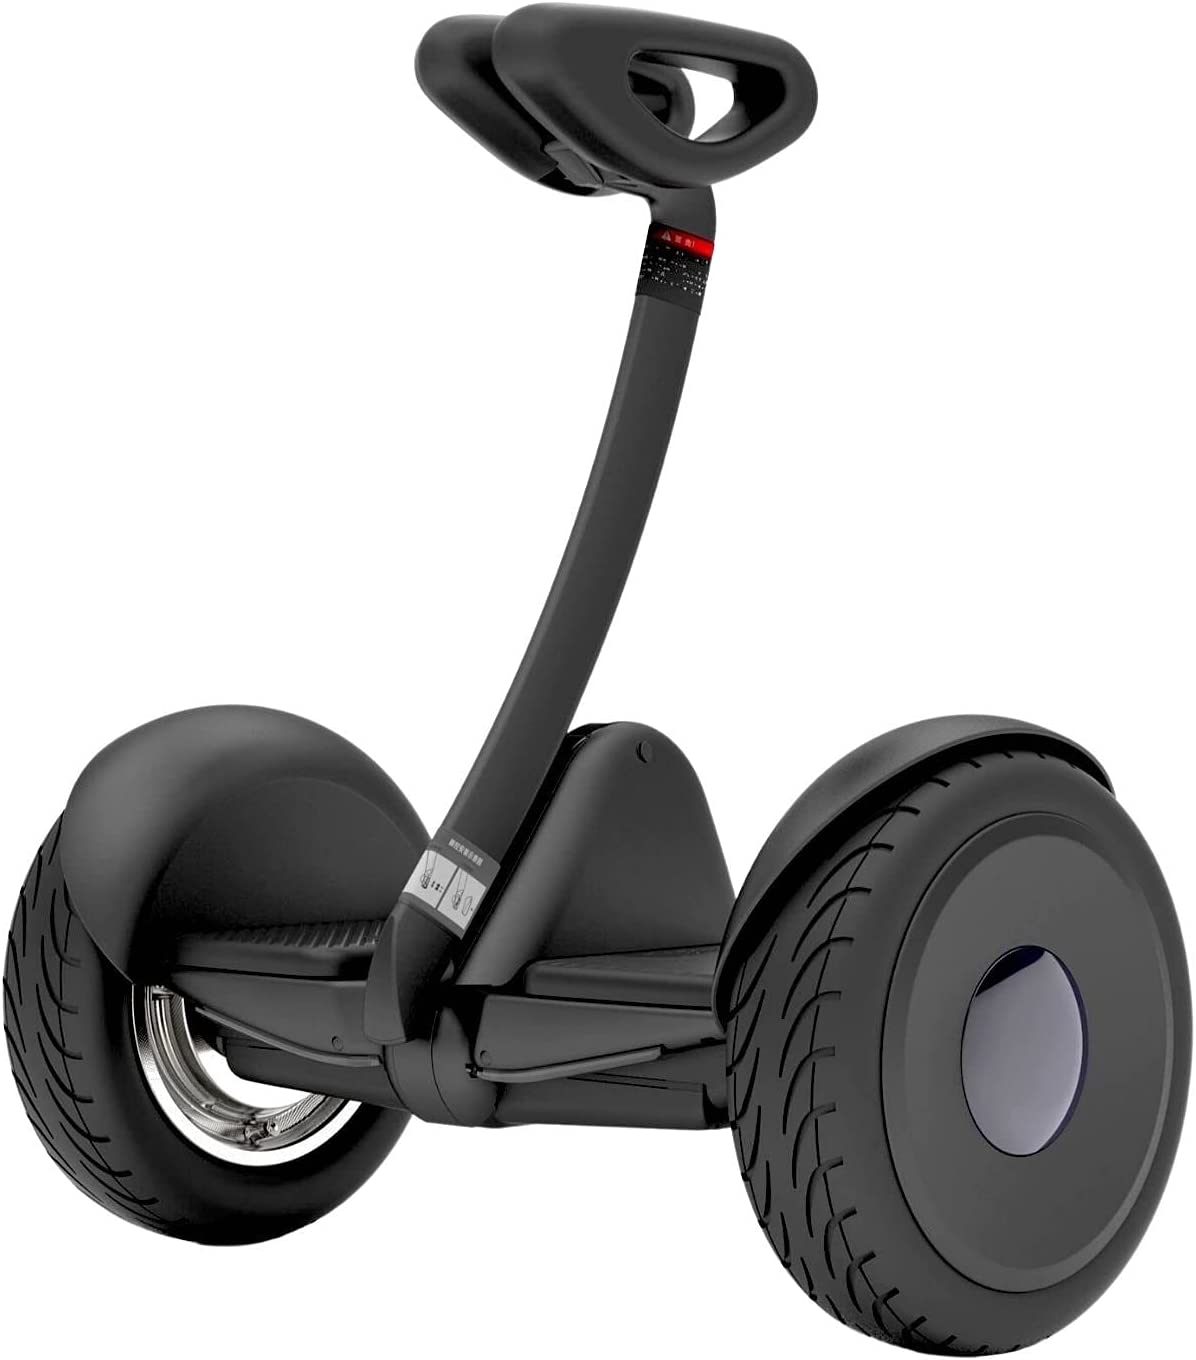 Segway Ninebot S Smart Self-Balancing Electric Scooter - $358